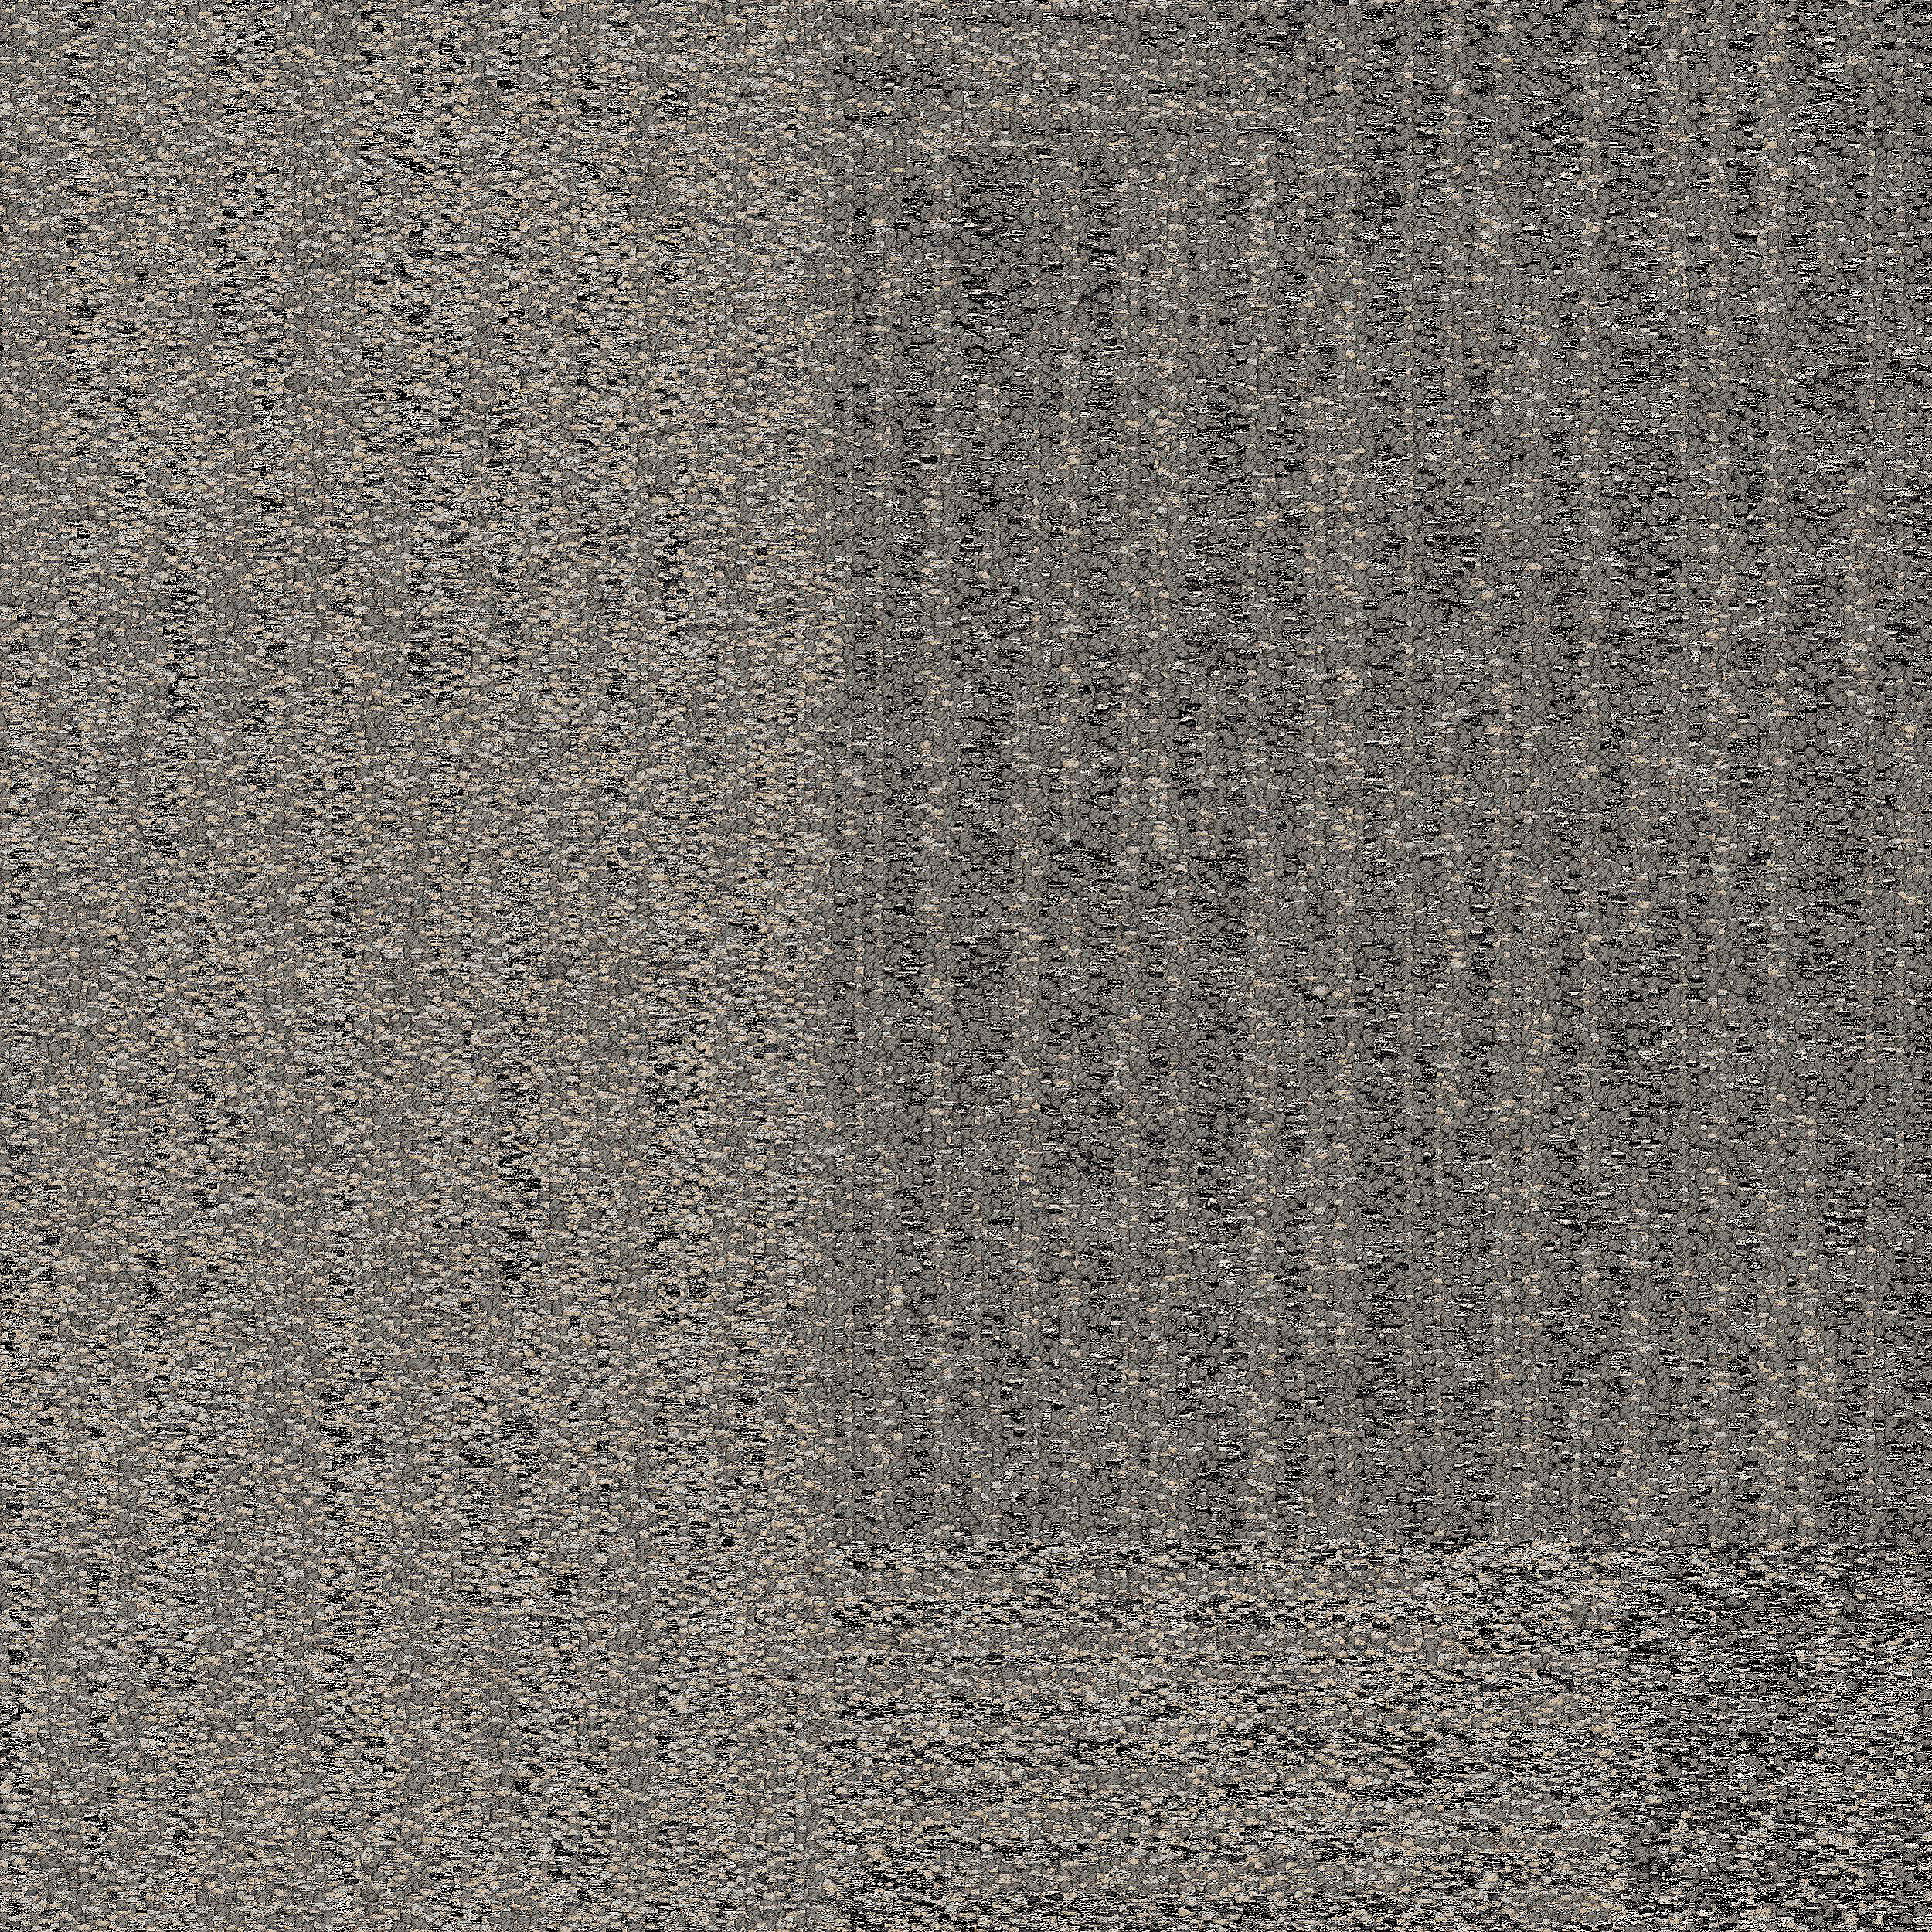 Cambria Carpet Tile In Mist imagen número 5